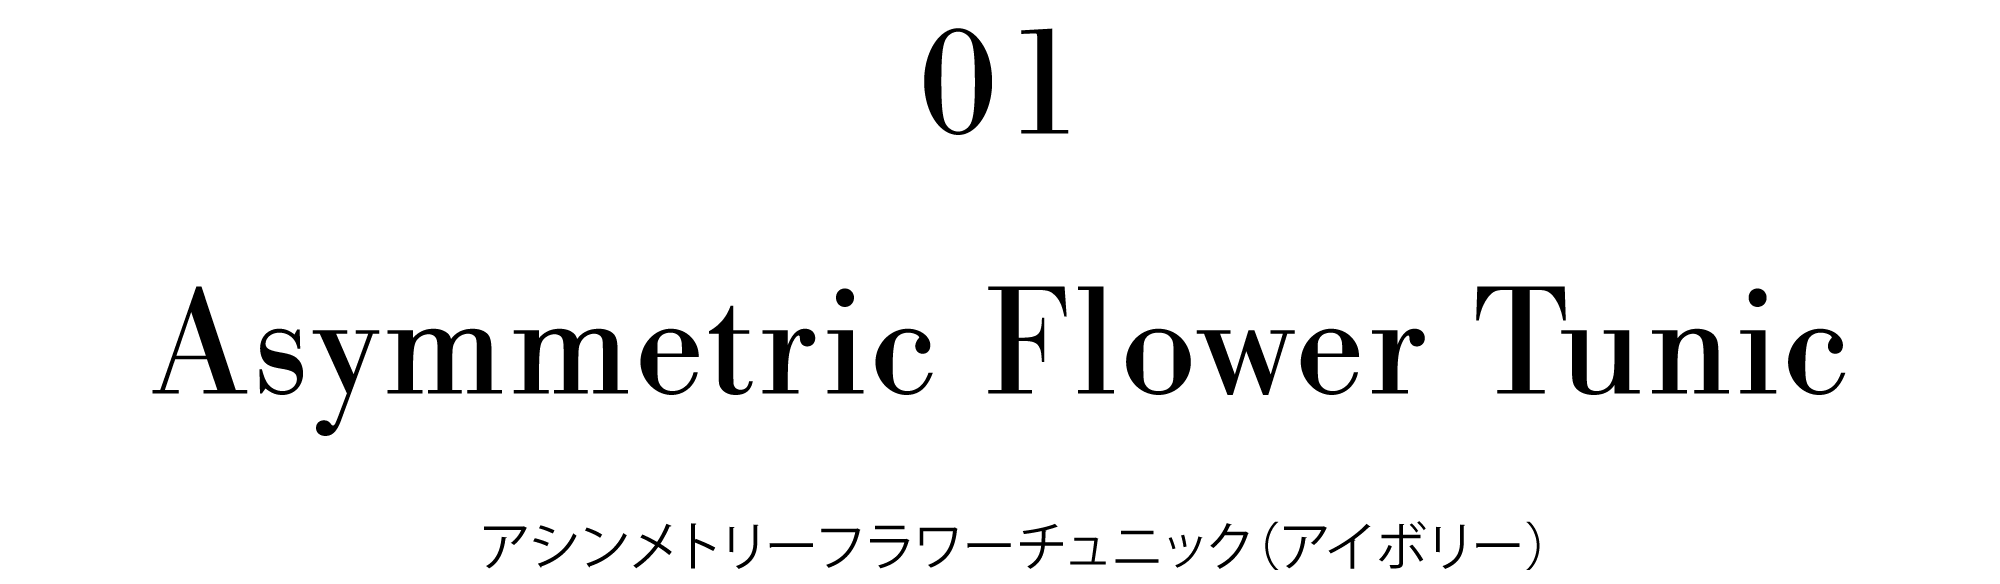 01 Asymmetric Flower tunic